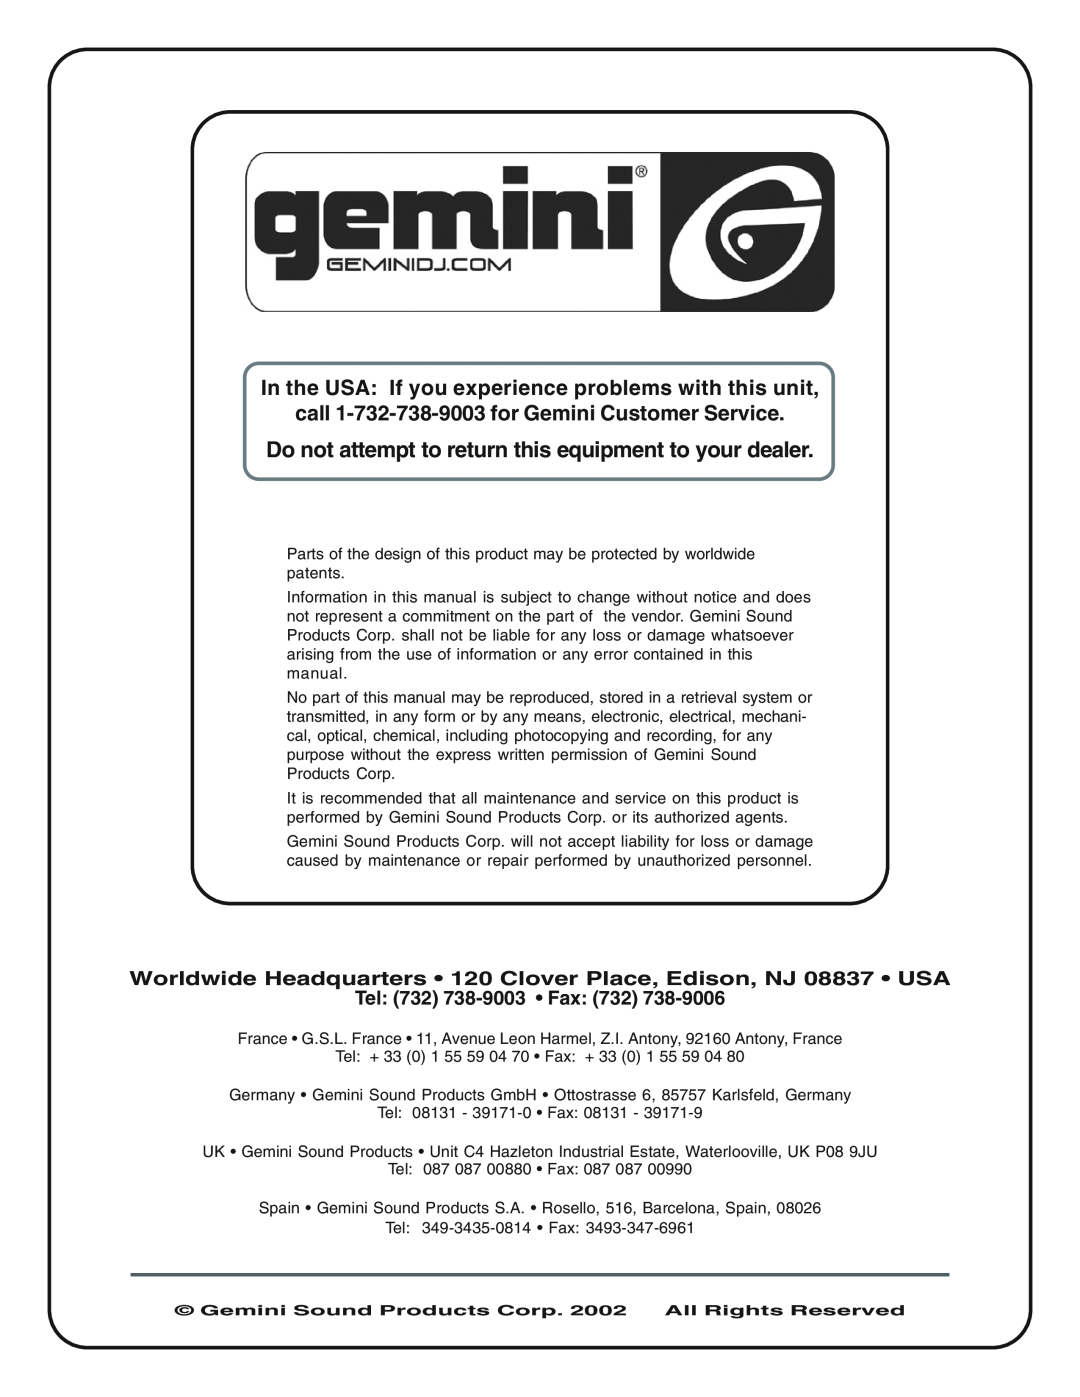 Gemini XL-500II manual call 1-732-738-9003for Gemini Customer Service, Tel 732 738-9003 Fax 